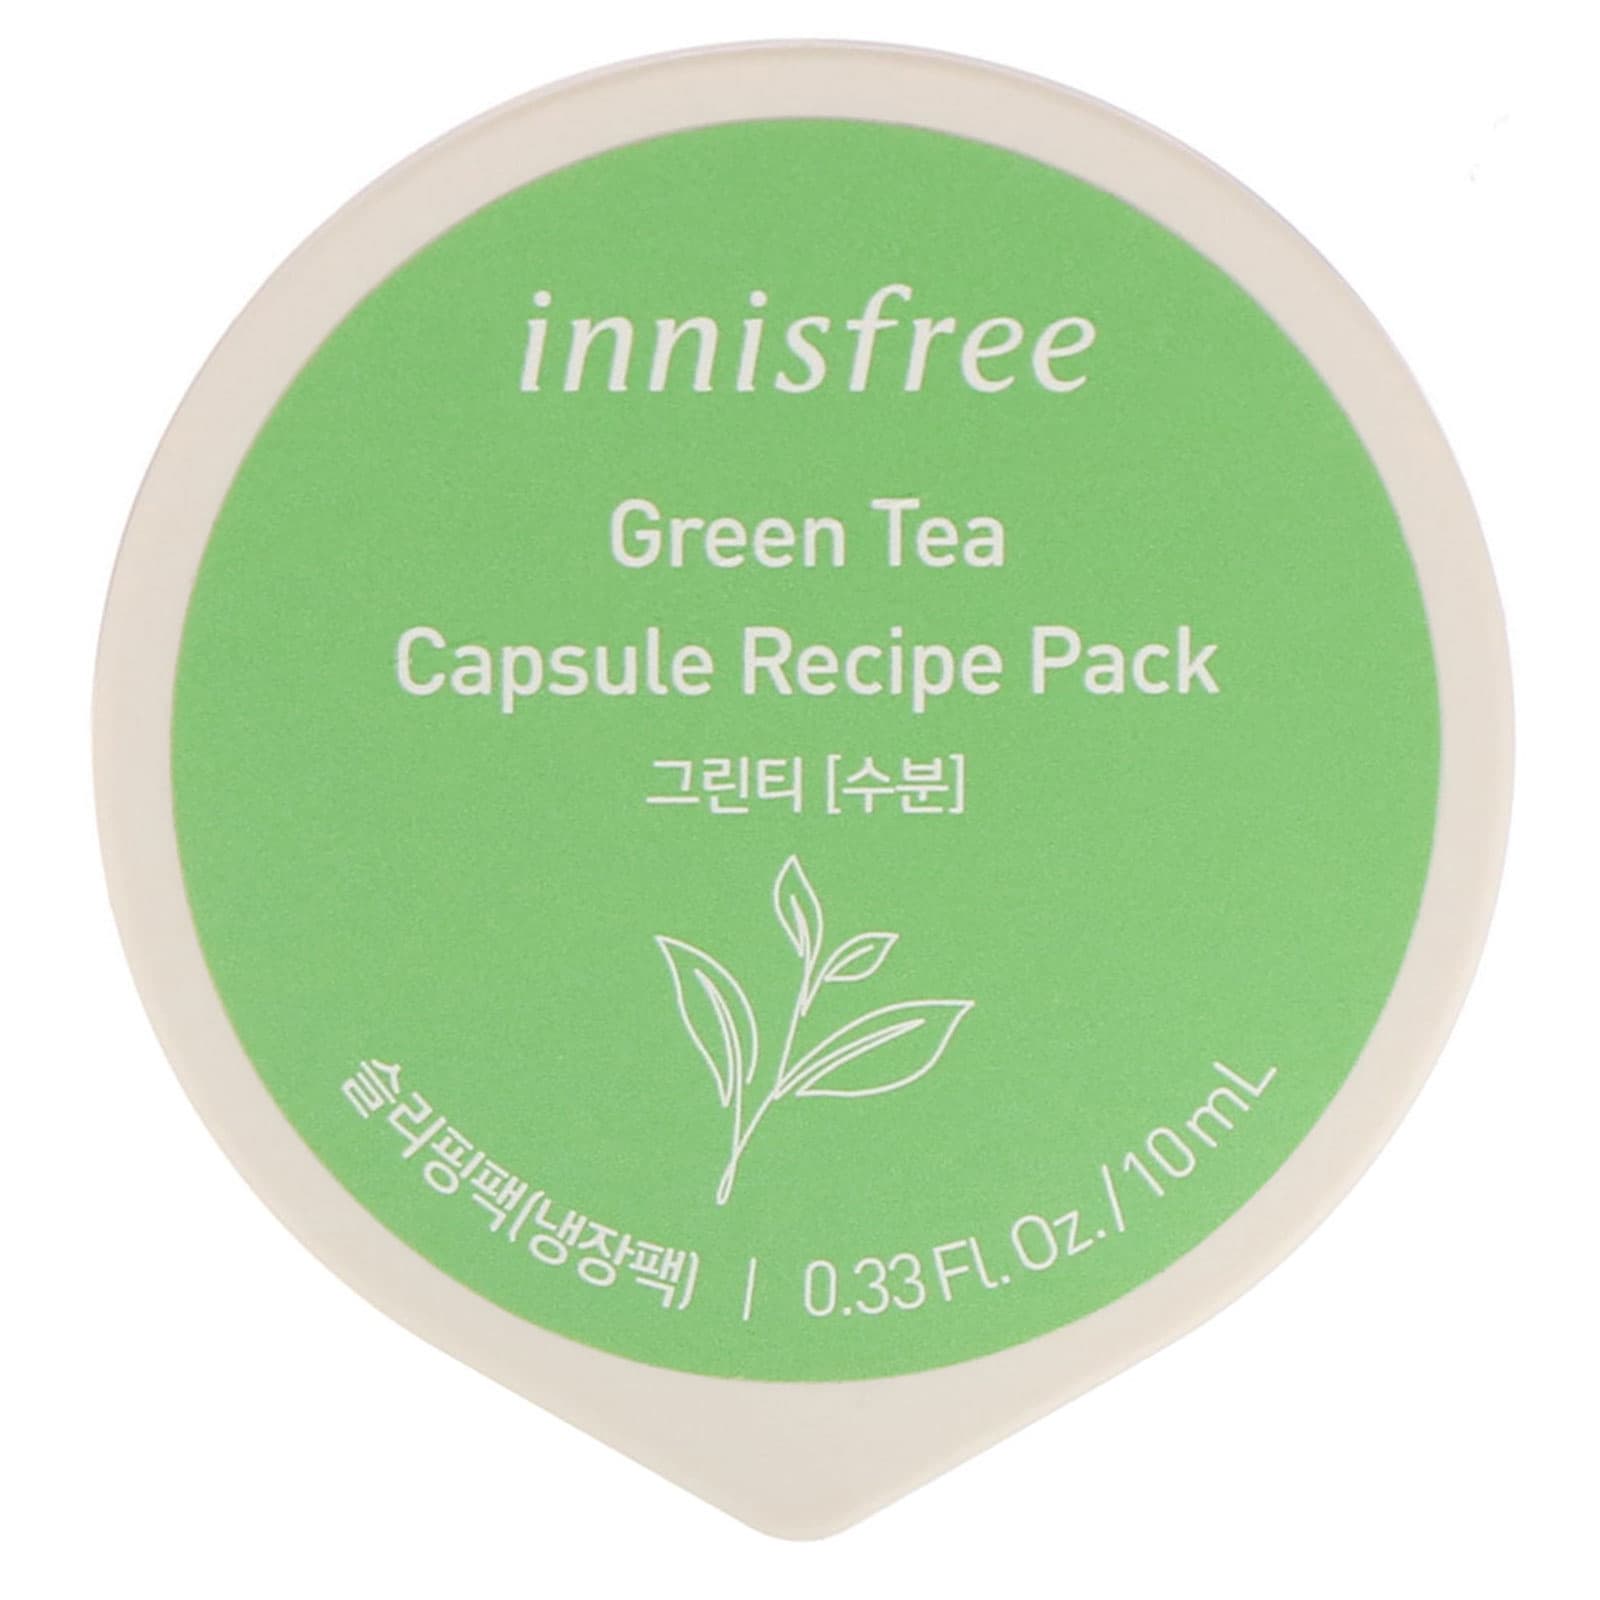 Innisfree, Capsule Recipe Pack, Green Tea (10 ml)